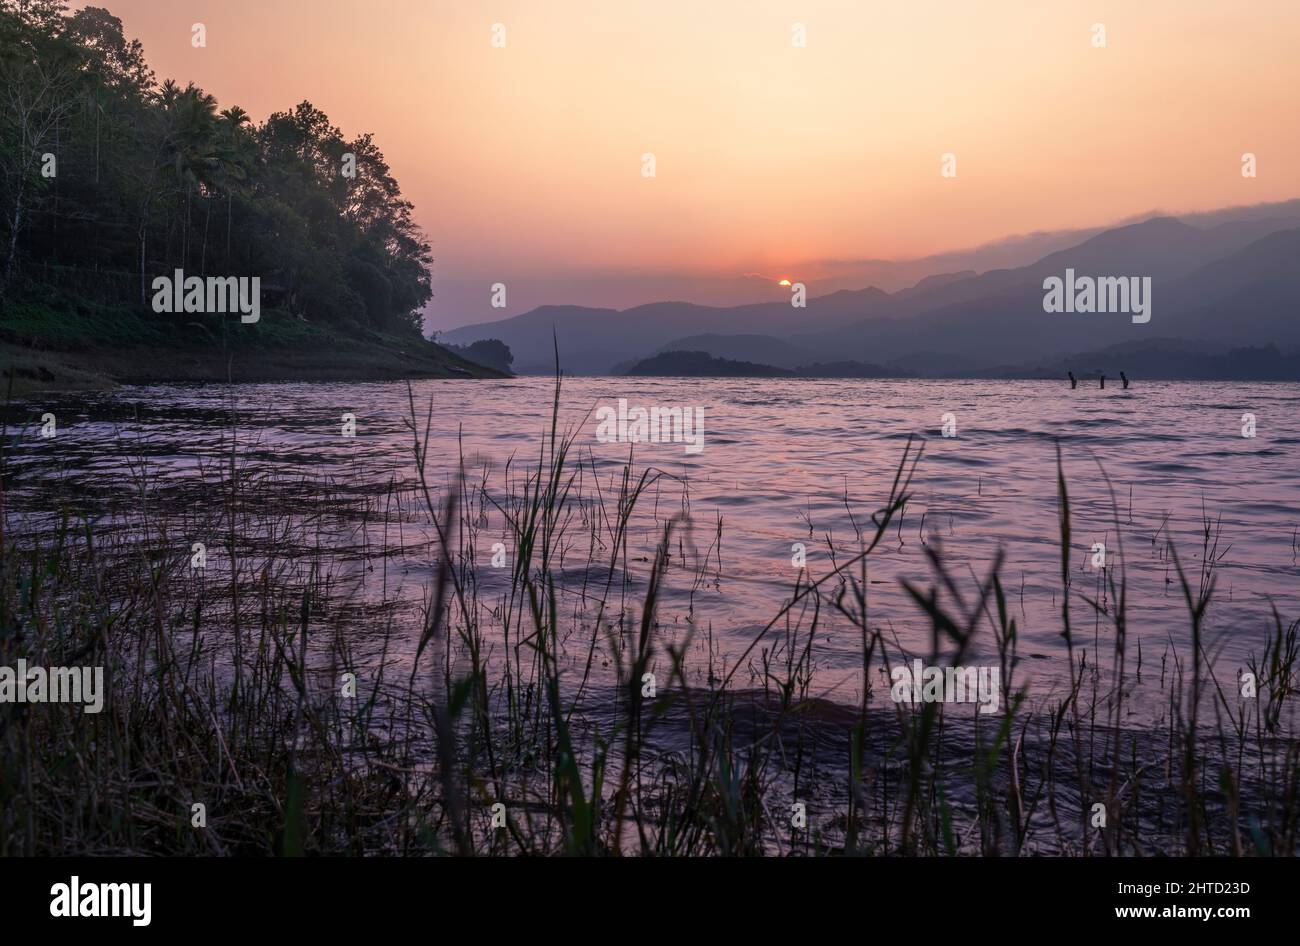 Splendida vista sul lago al tramonto, ripresa dalla diga Wayanad Banasura Foto Stock